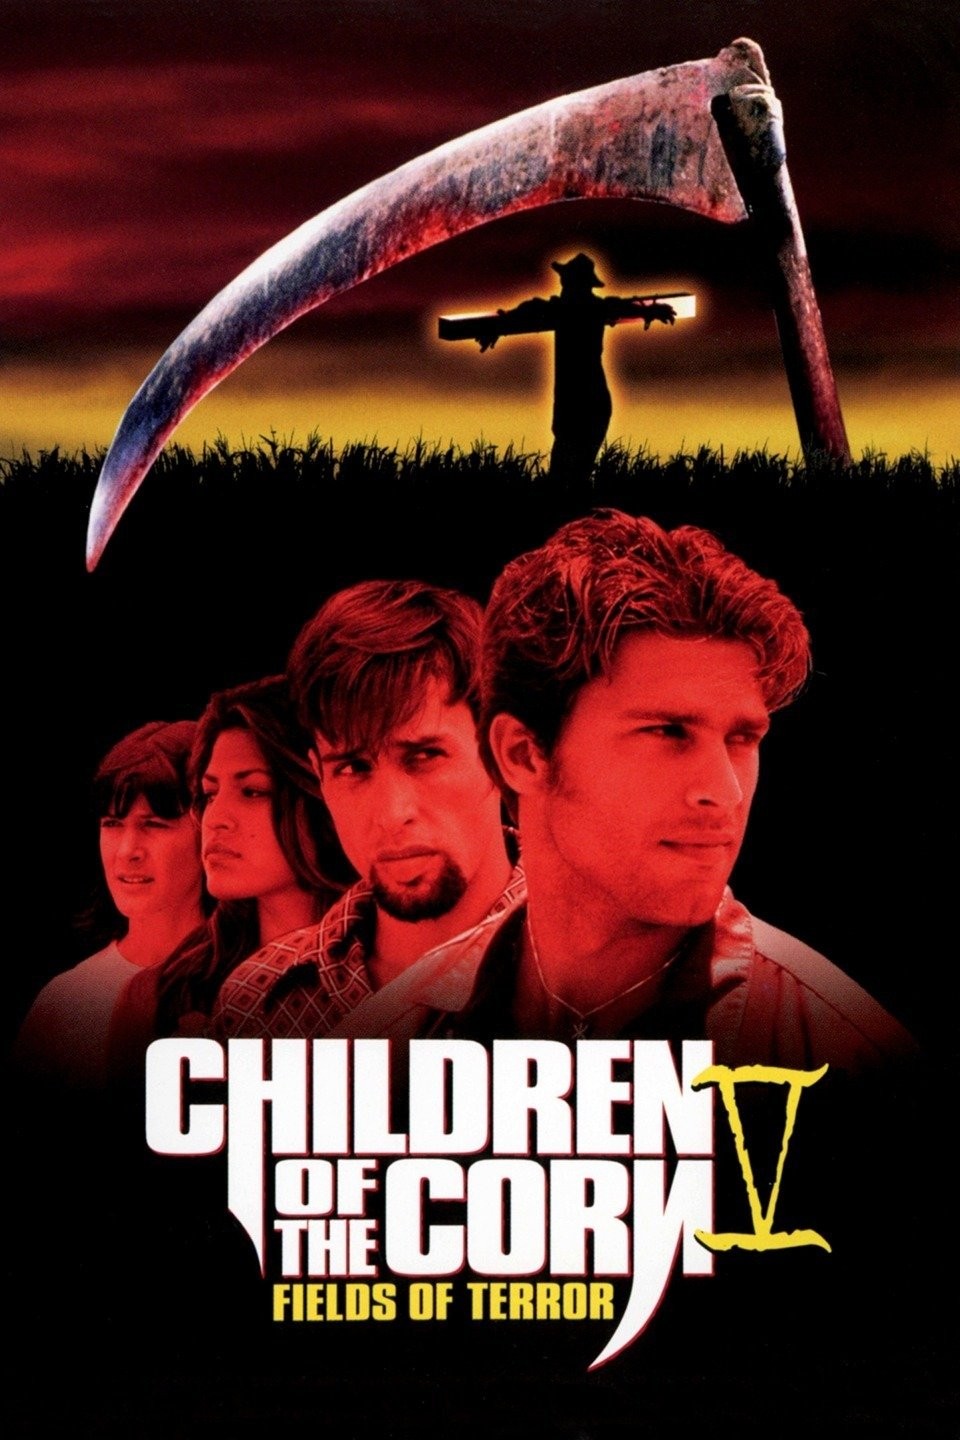 Children of the Corn V Fields of Terror Rotten Tomatoes